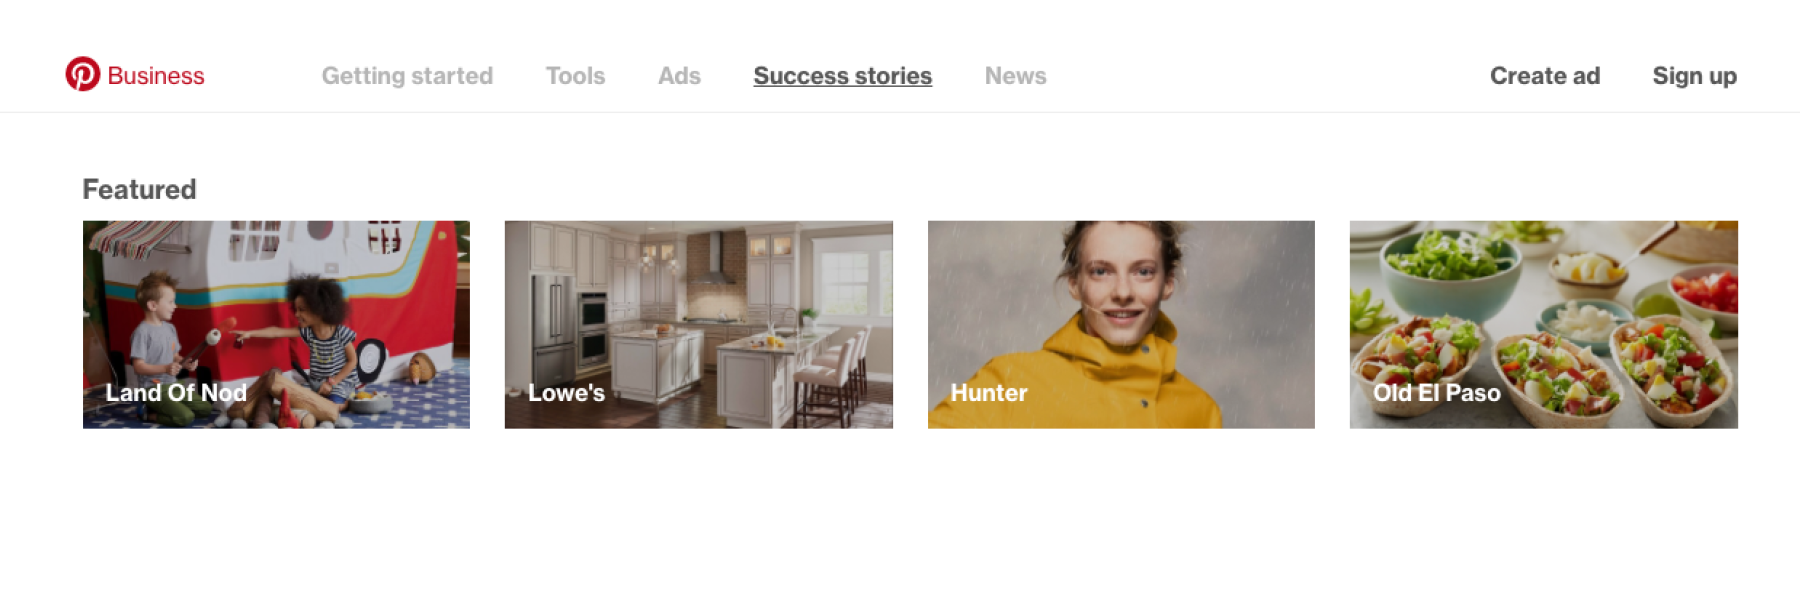 Pinterest for Business Success Stories Nav Preview